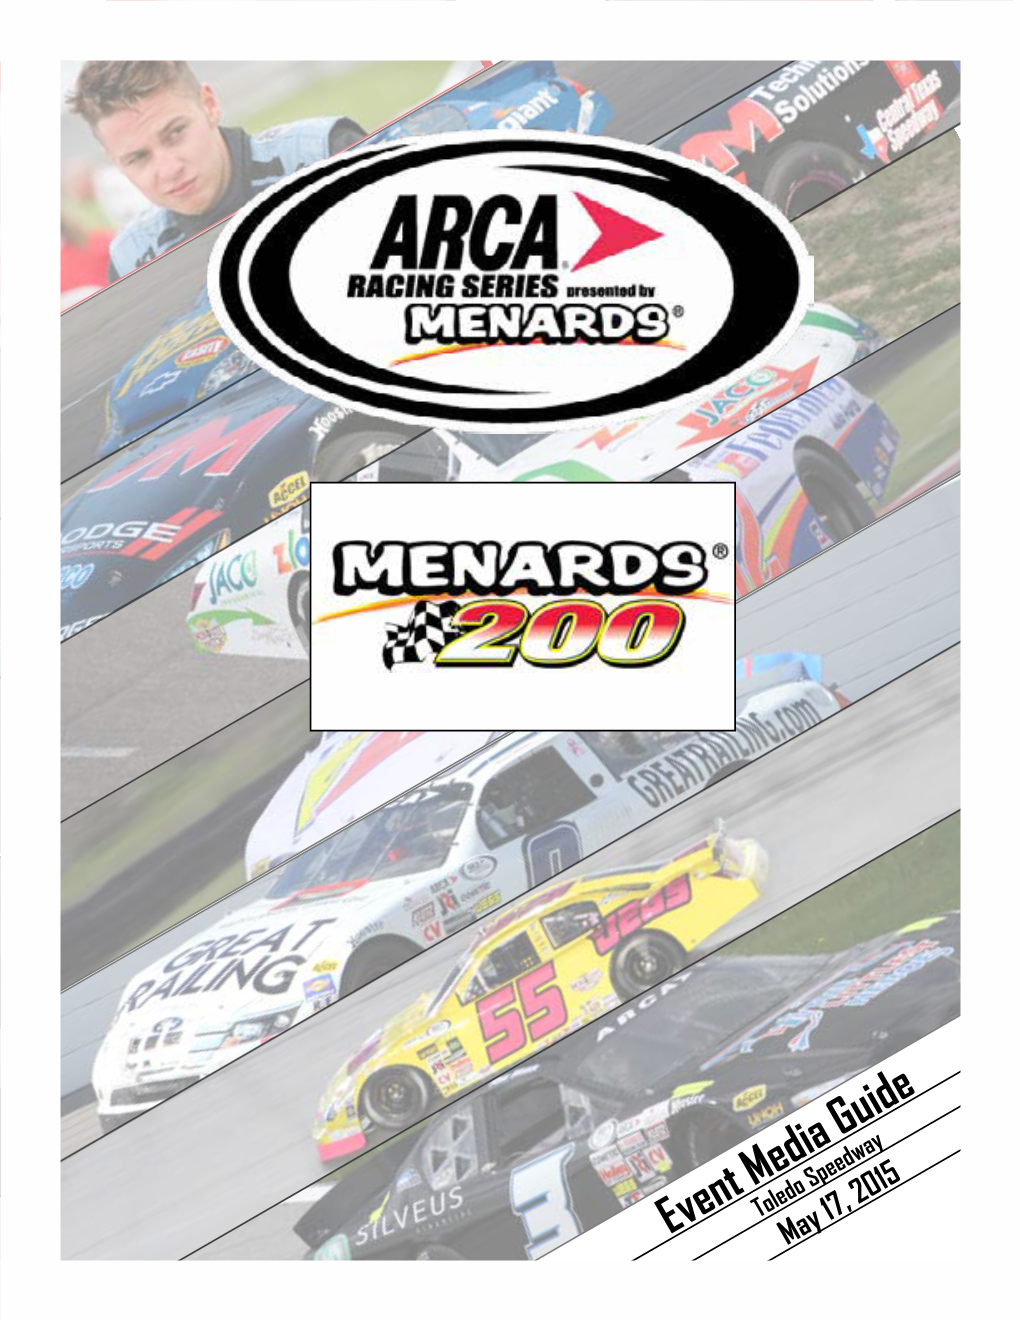 Event Media Guide • 3 ARCA Racing Series Presented by Menards 2015